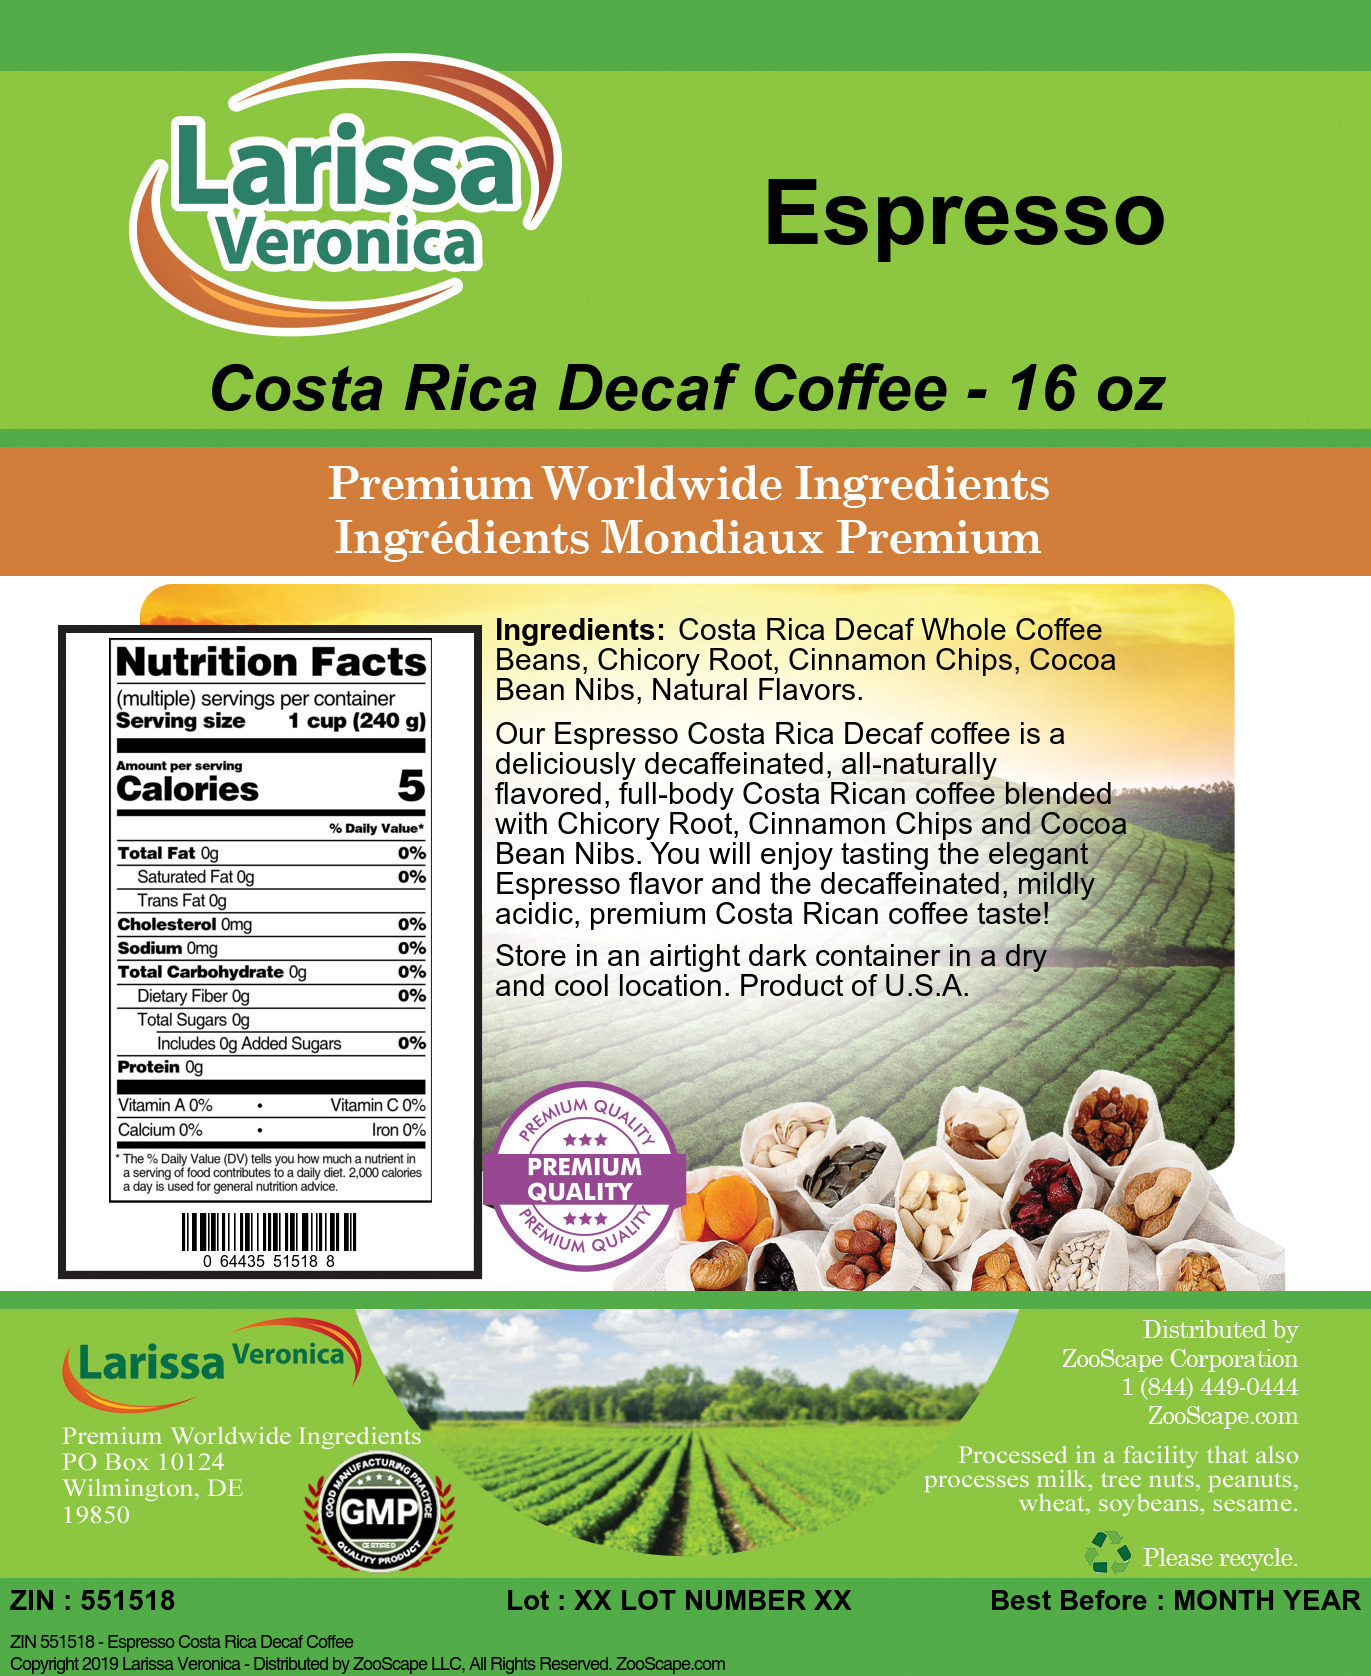 Espresso Costa Rica Decaf Coffee - Label